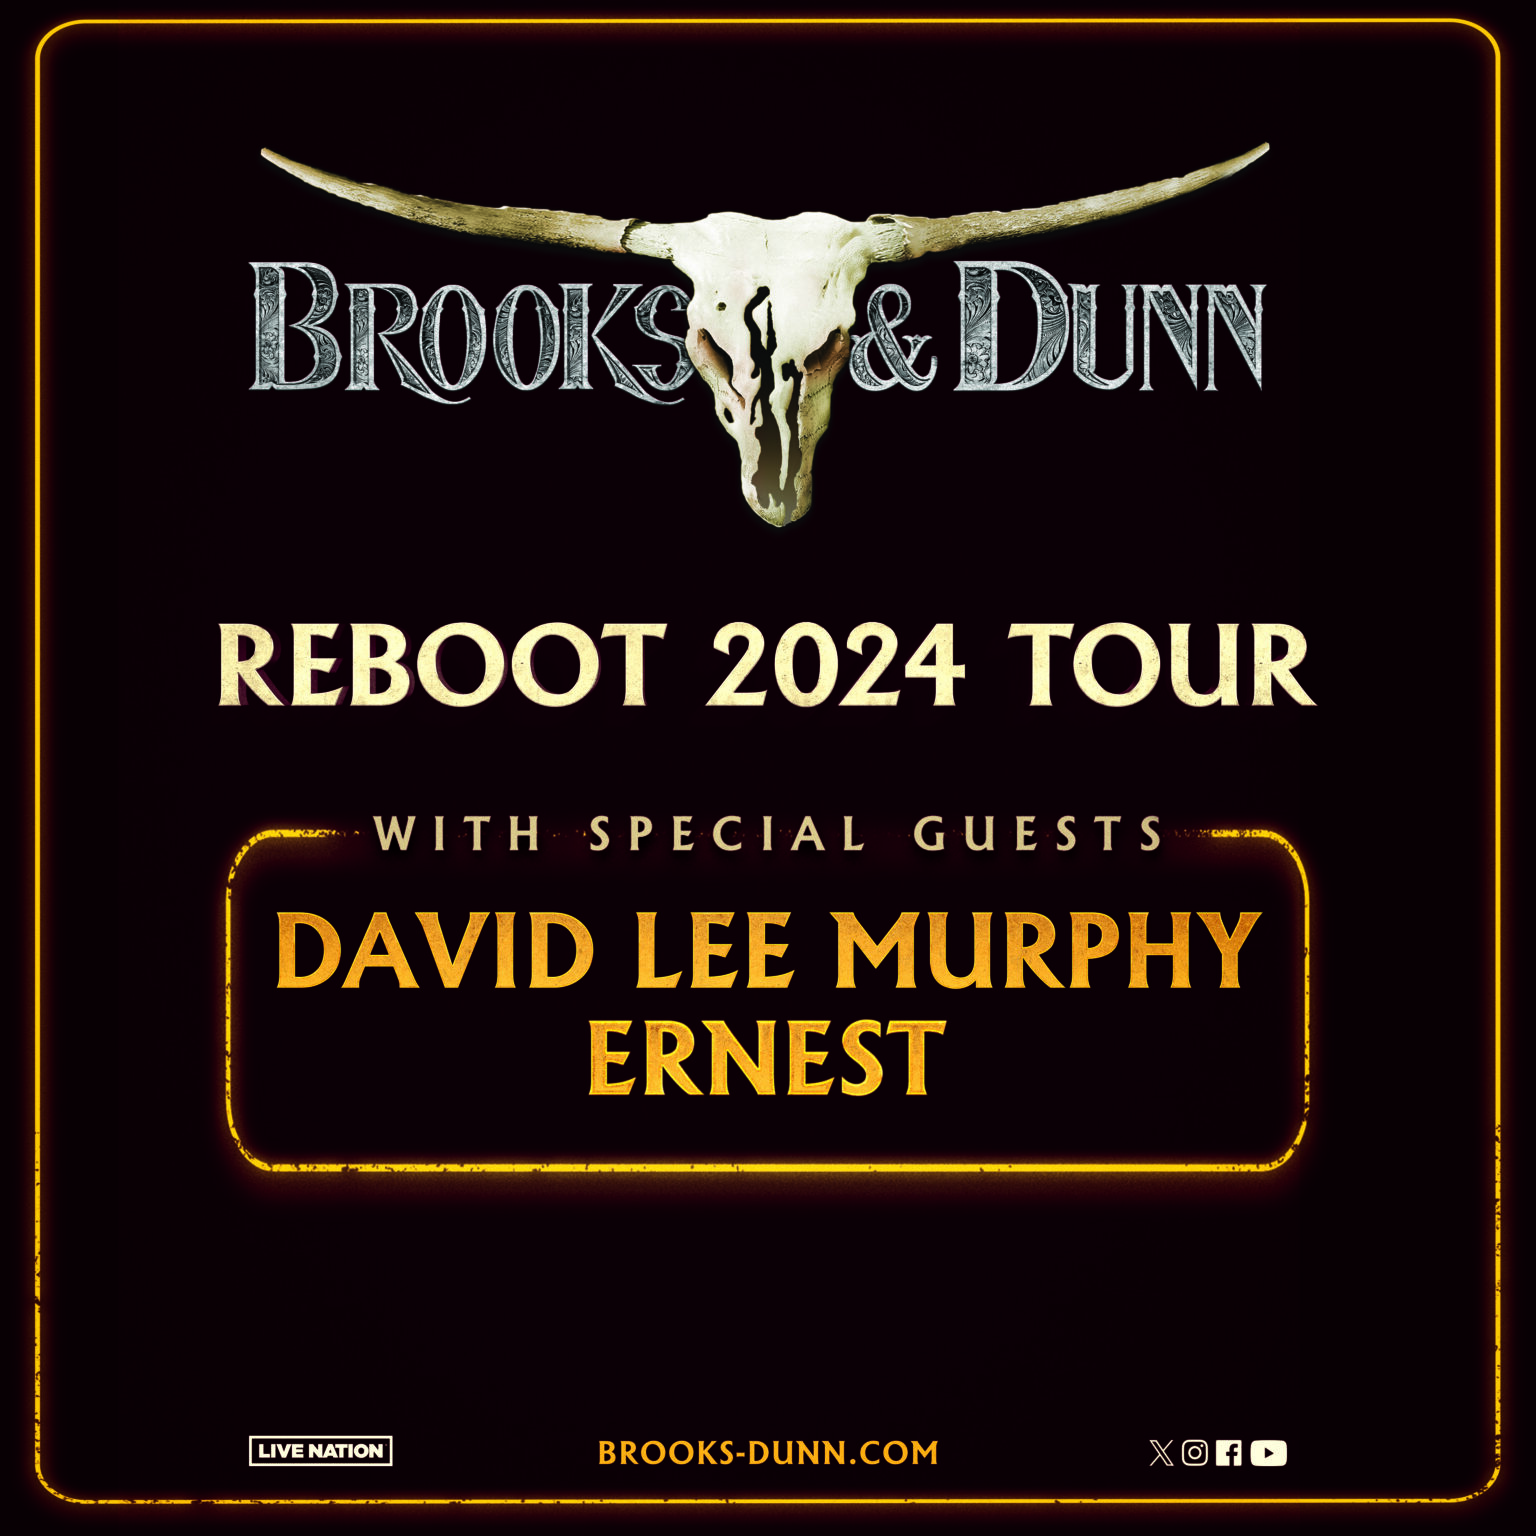 Brooks & Dunn BROOKS & DUNN BUCKLE UP FOR THE REBOOT TOUR 2024